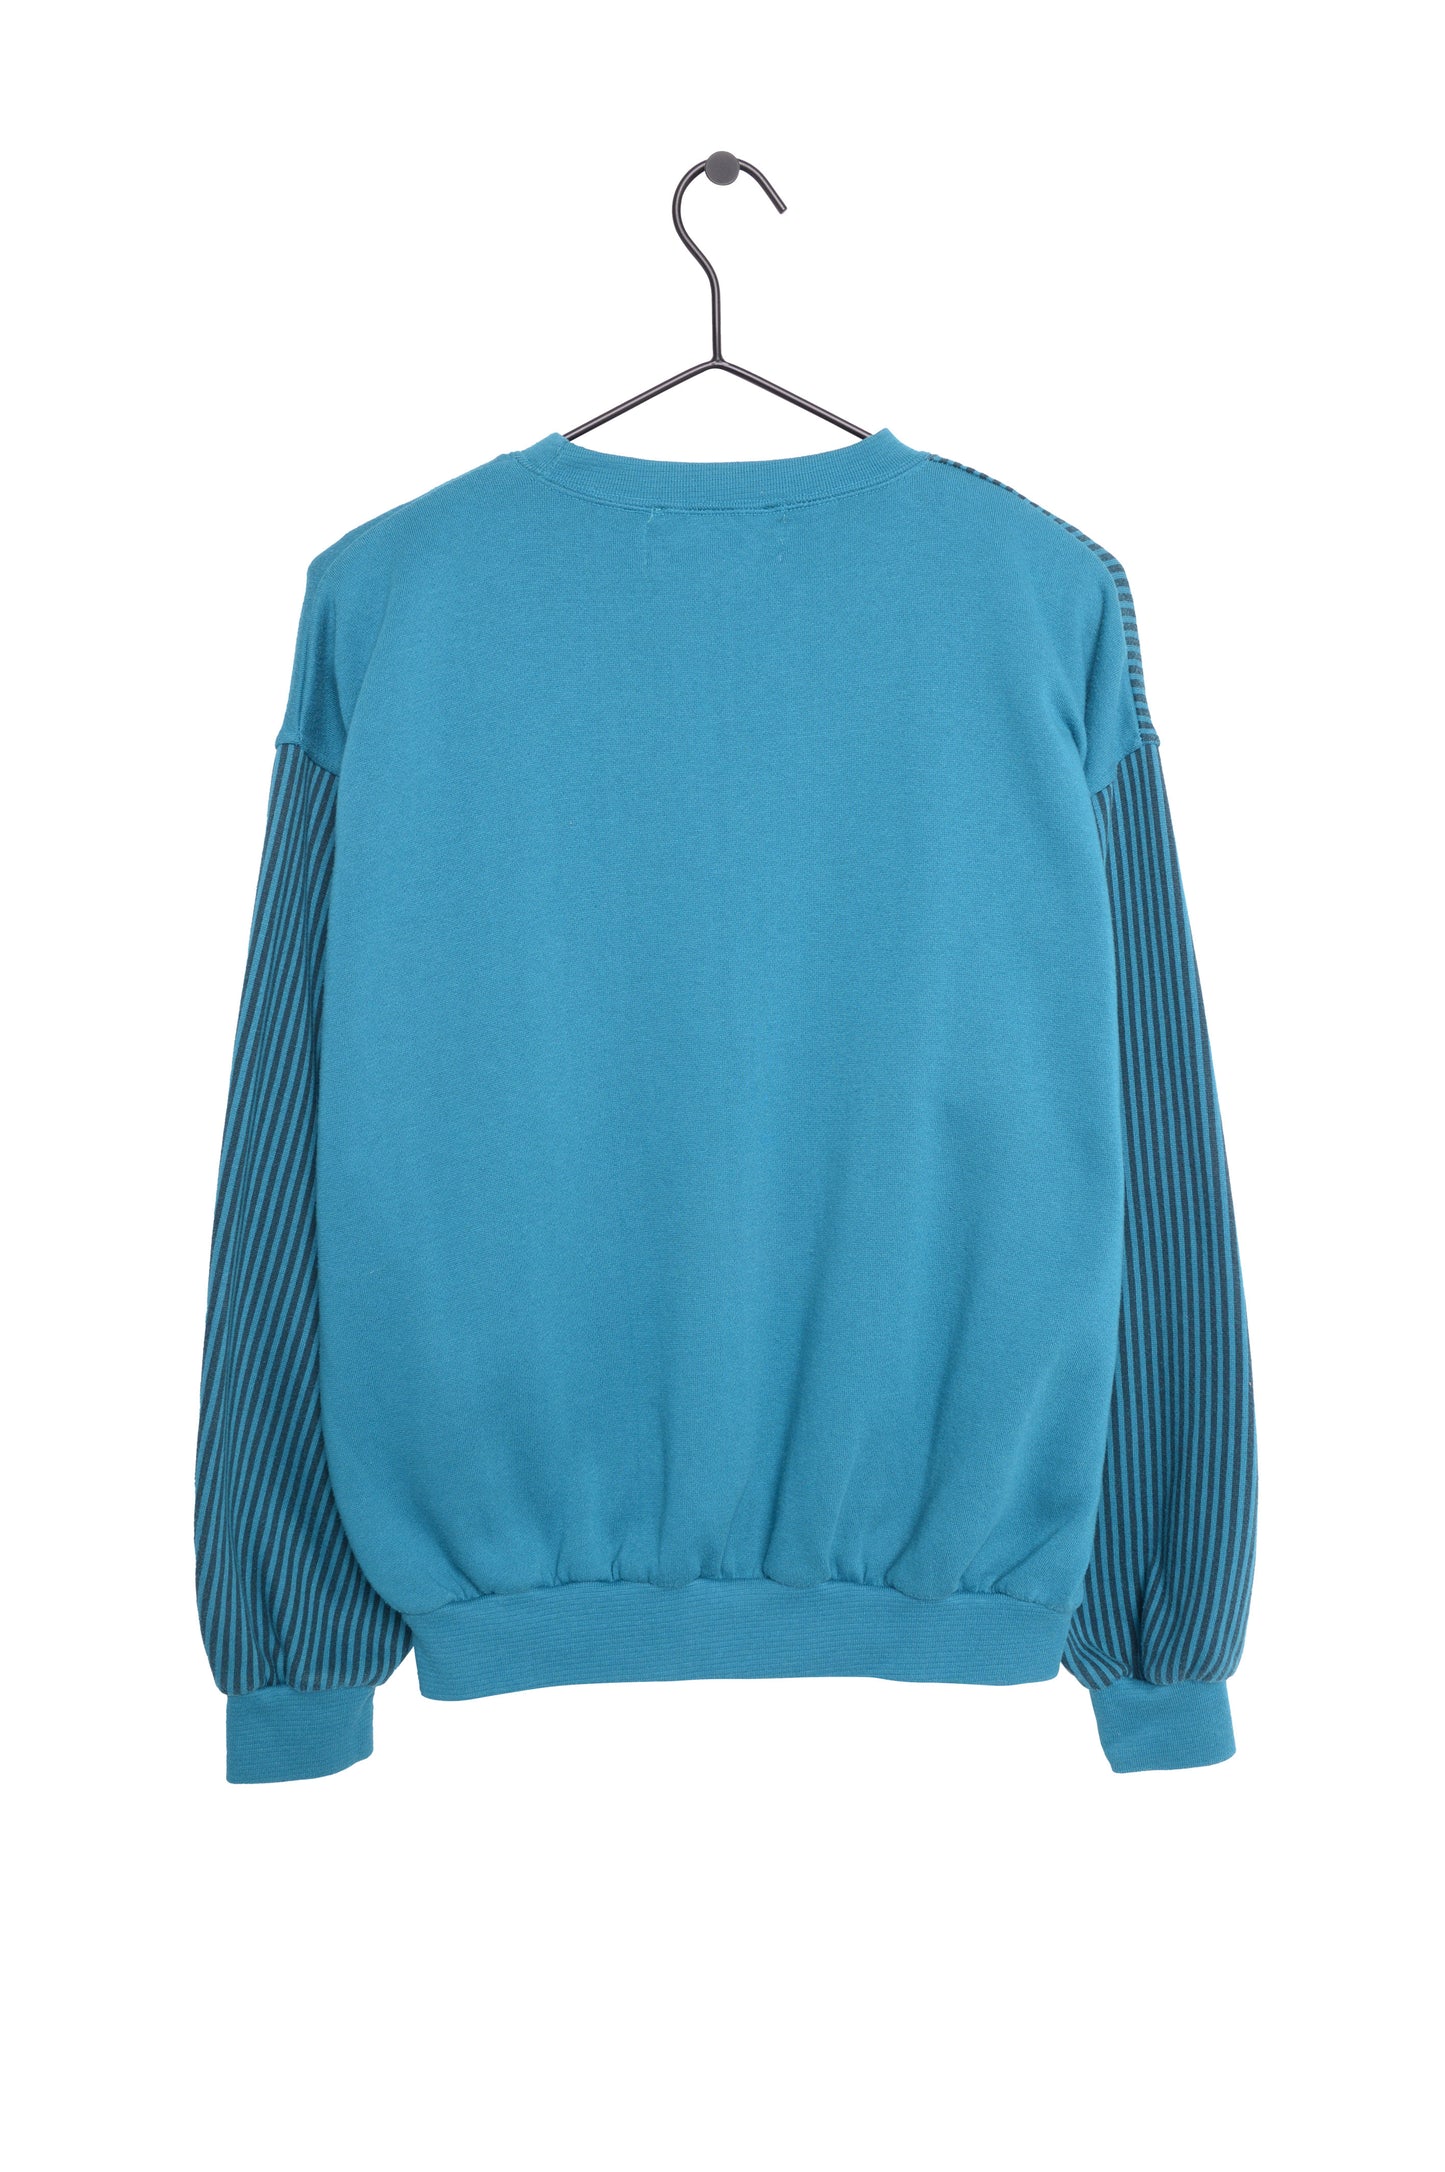 1980s Soft Colorblock Sweatshirt